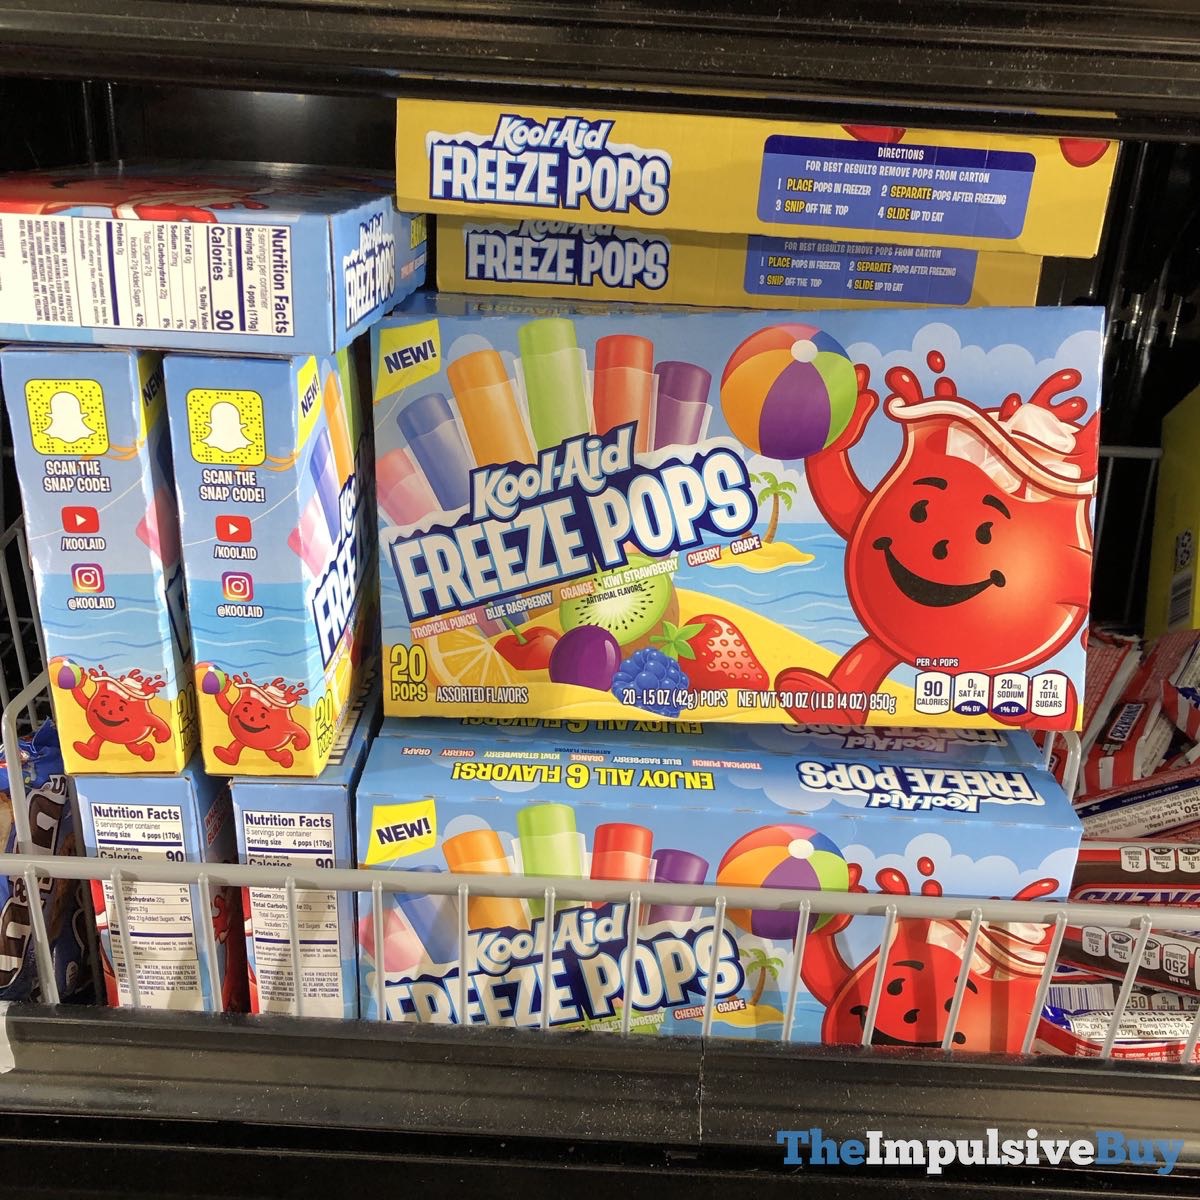 spotted-kool-aid-freeze-pops-the-impulsive-buy